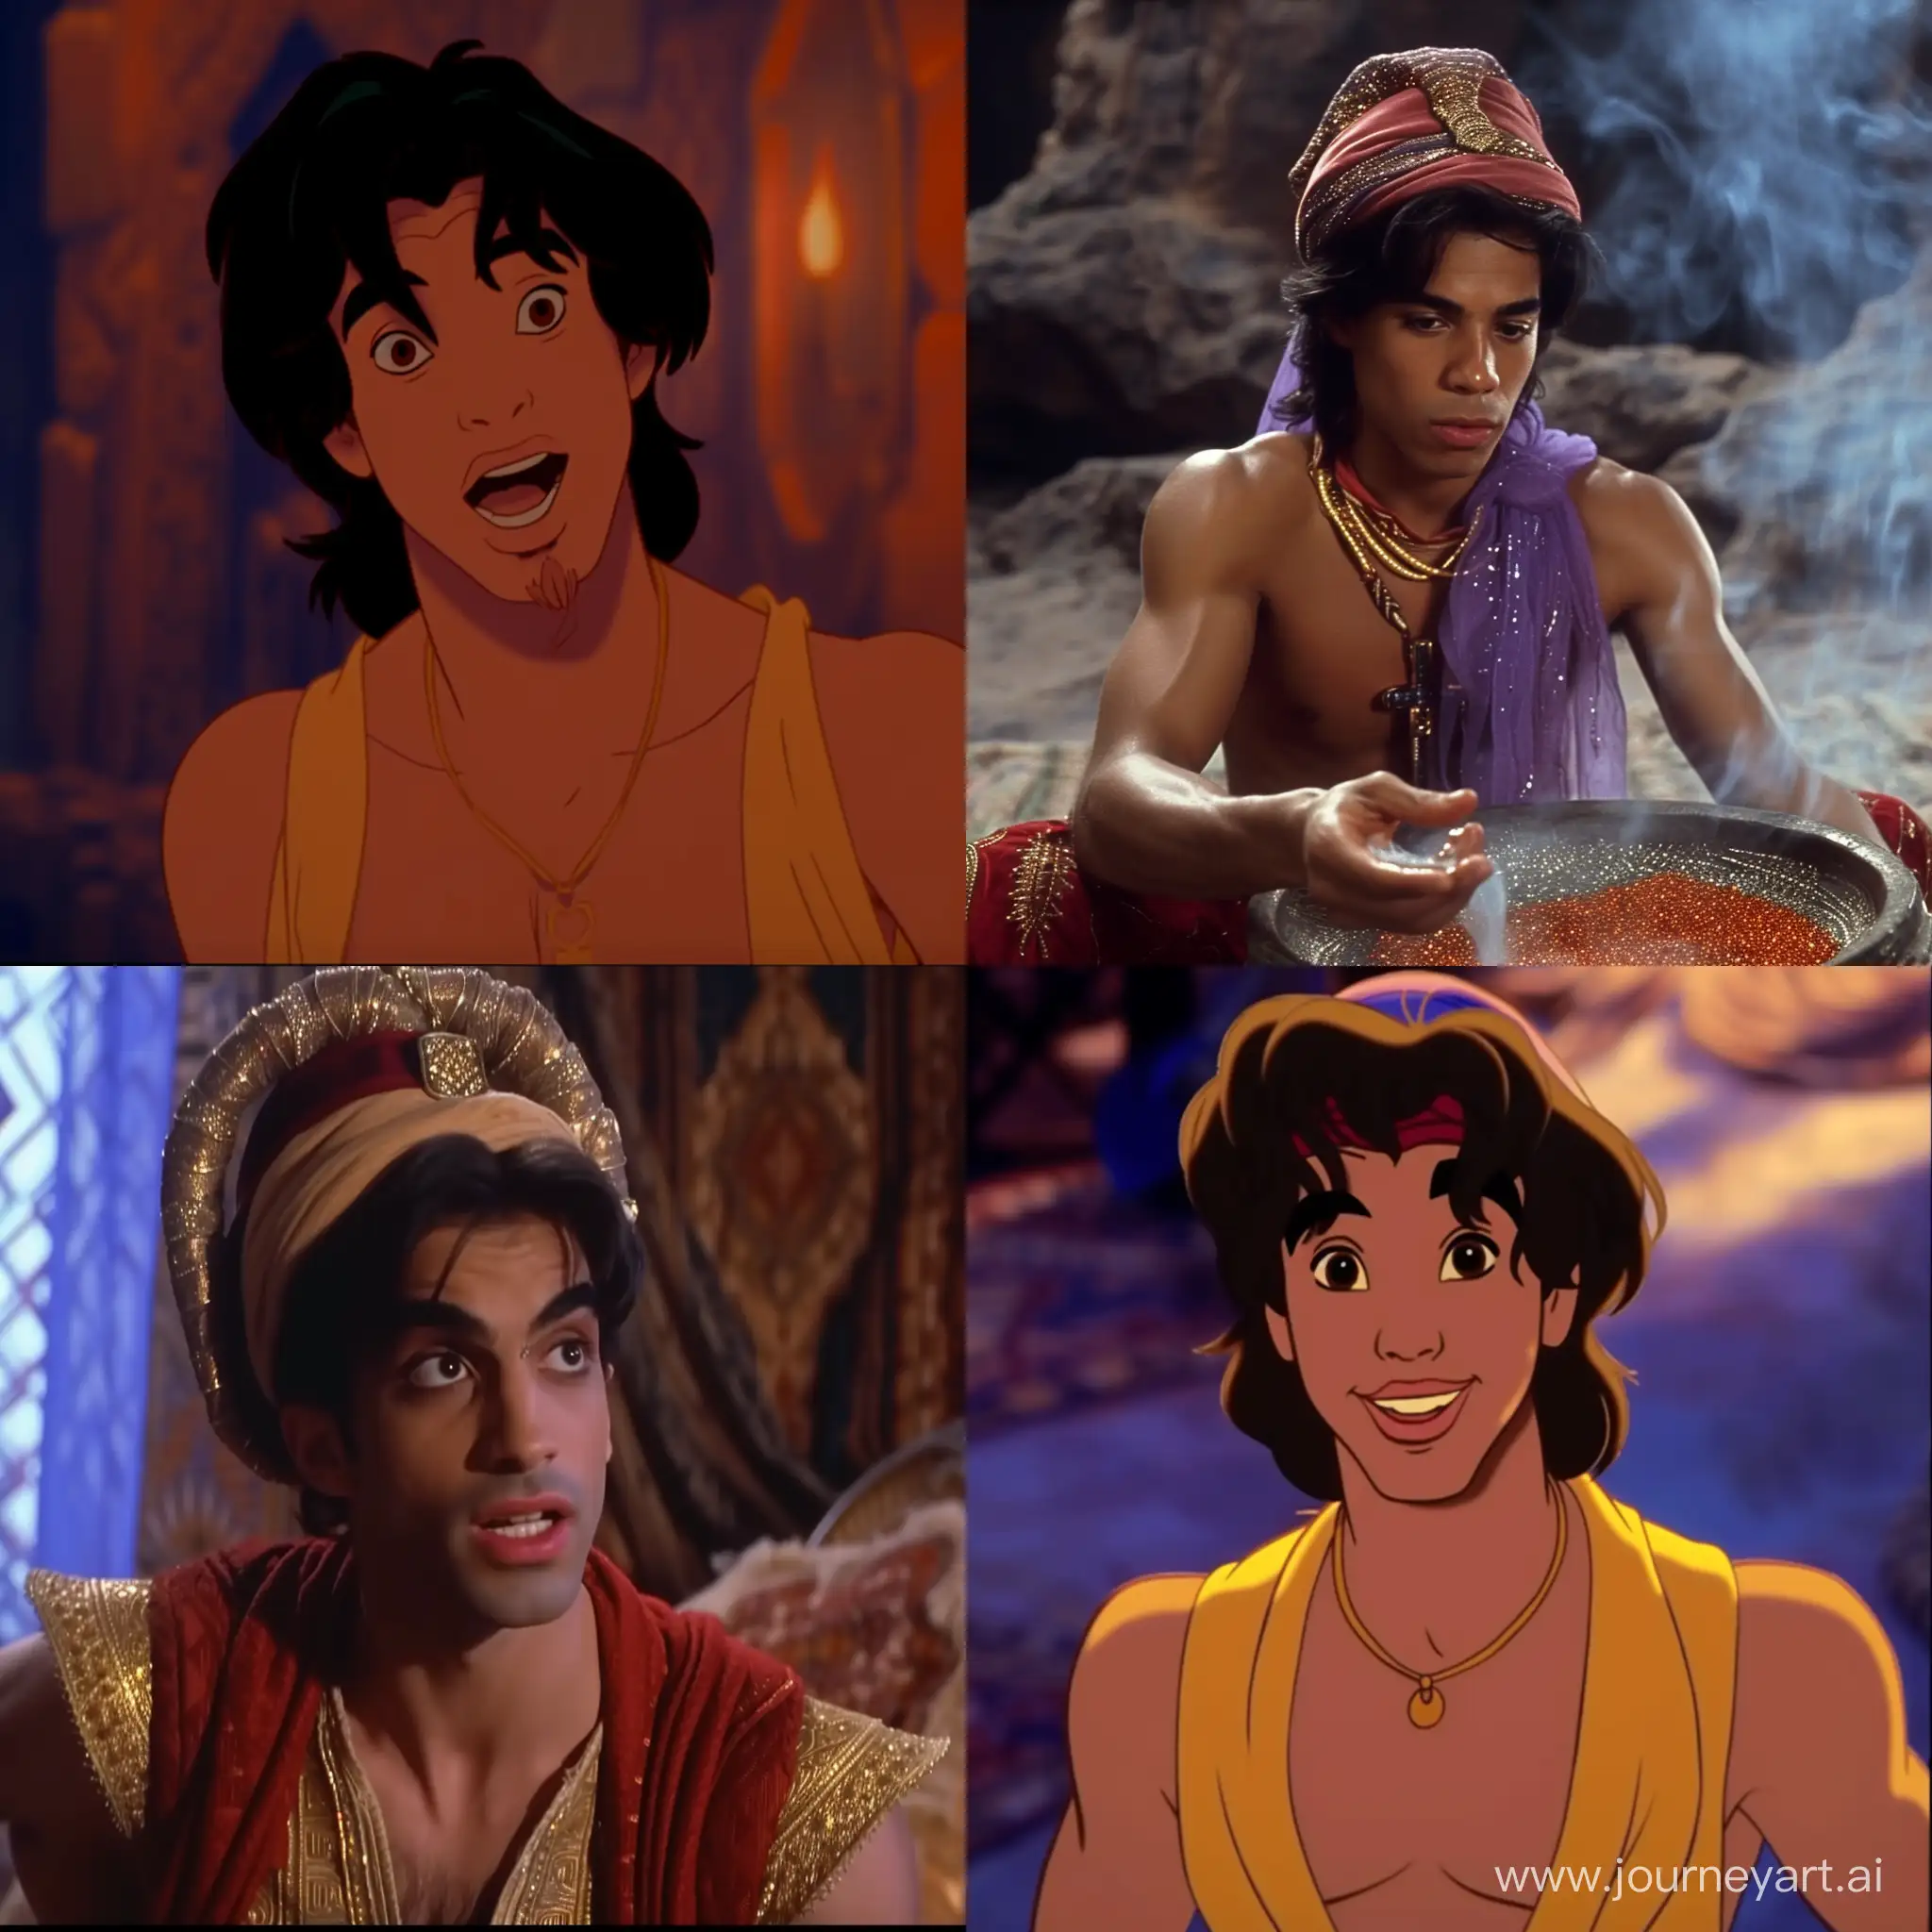 Aladdin-Holding-Excalibur-Sword-Fantasy-Adventure-Scene